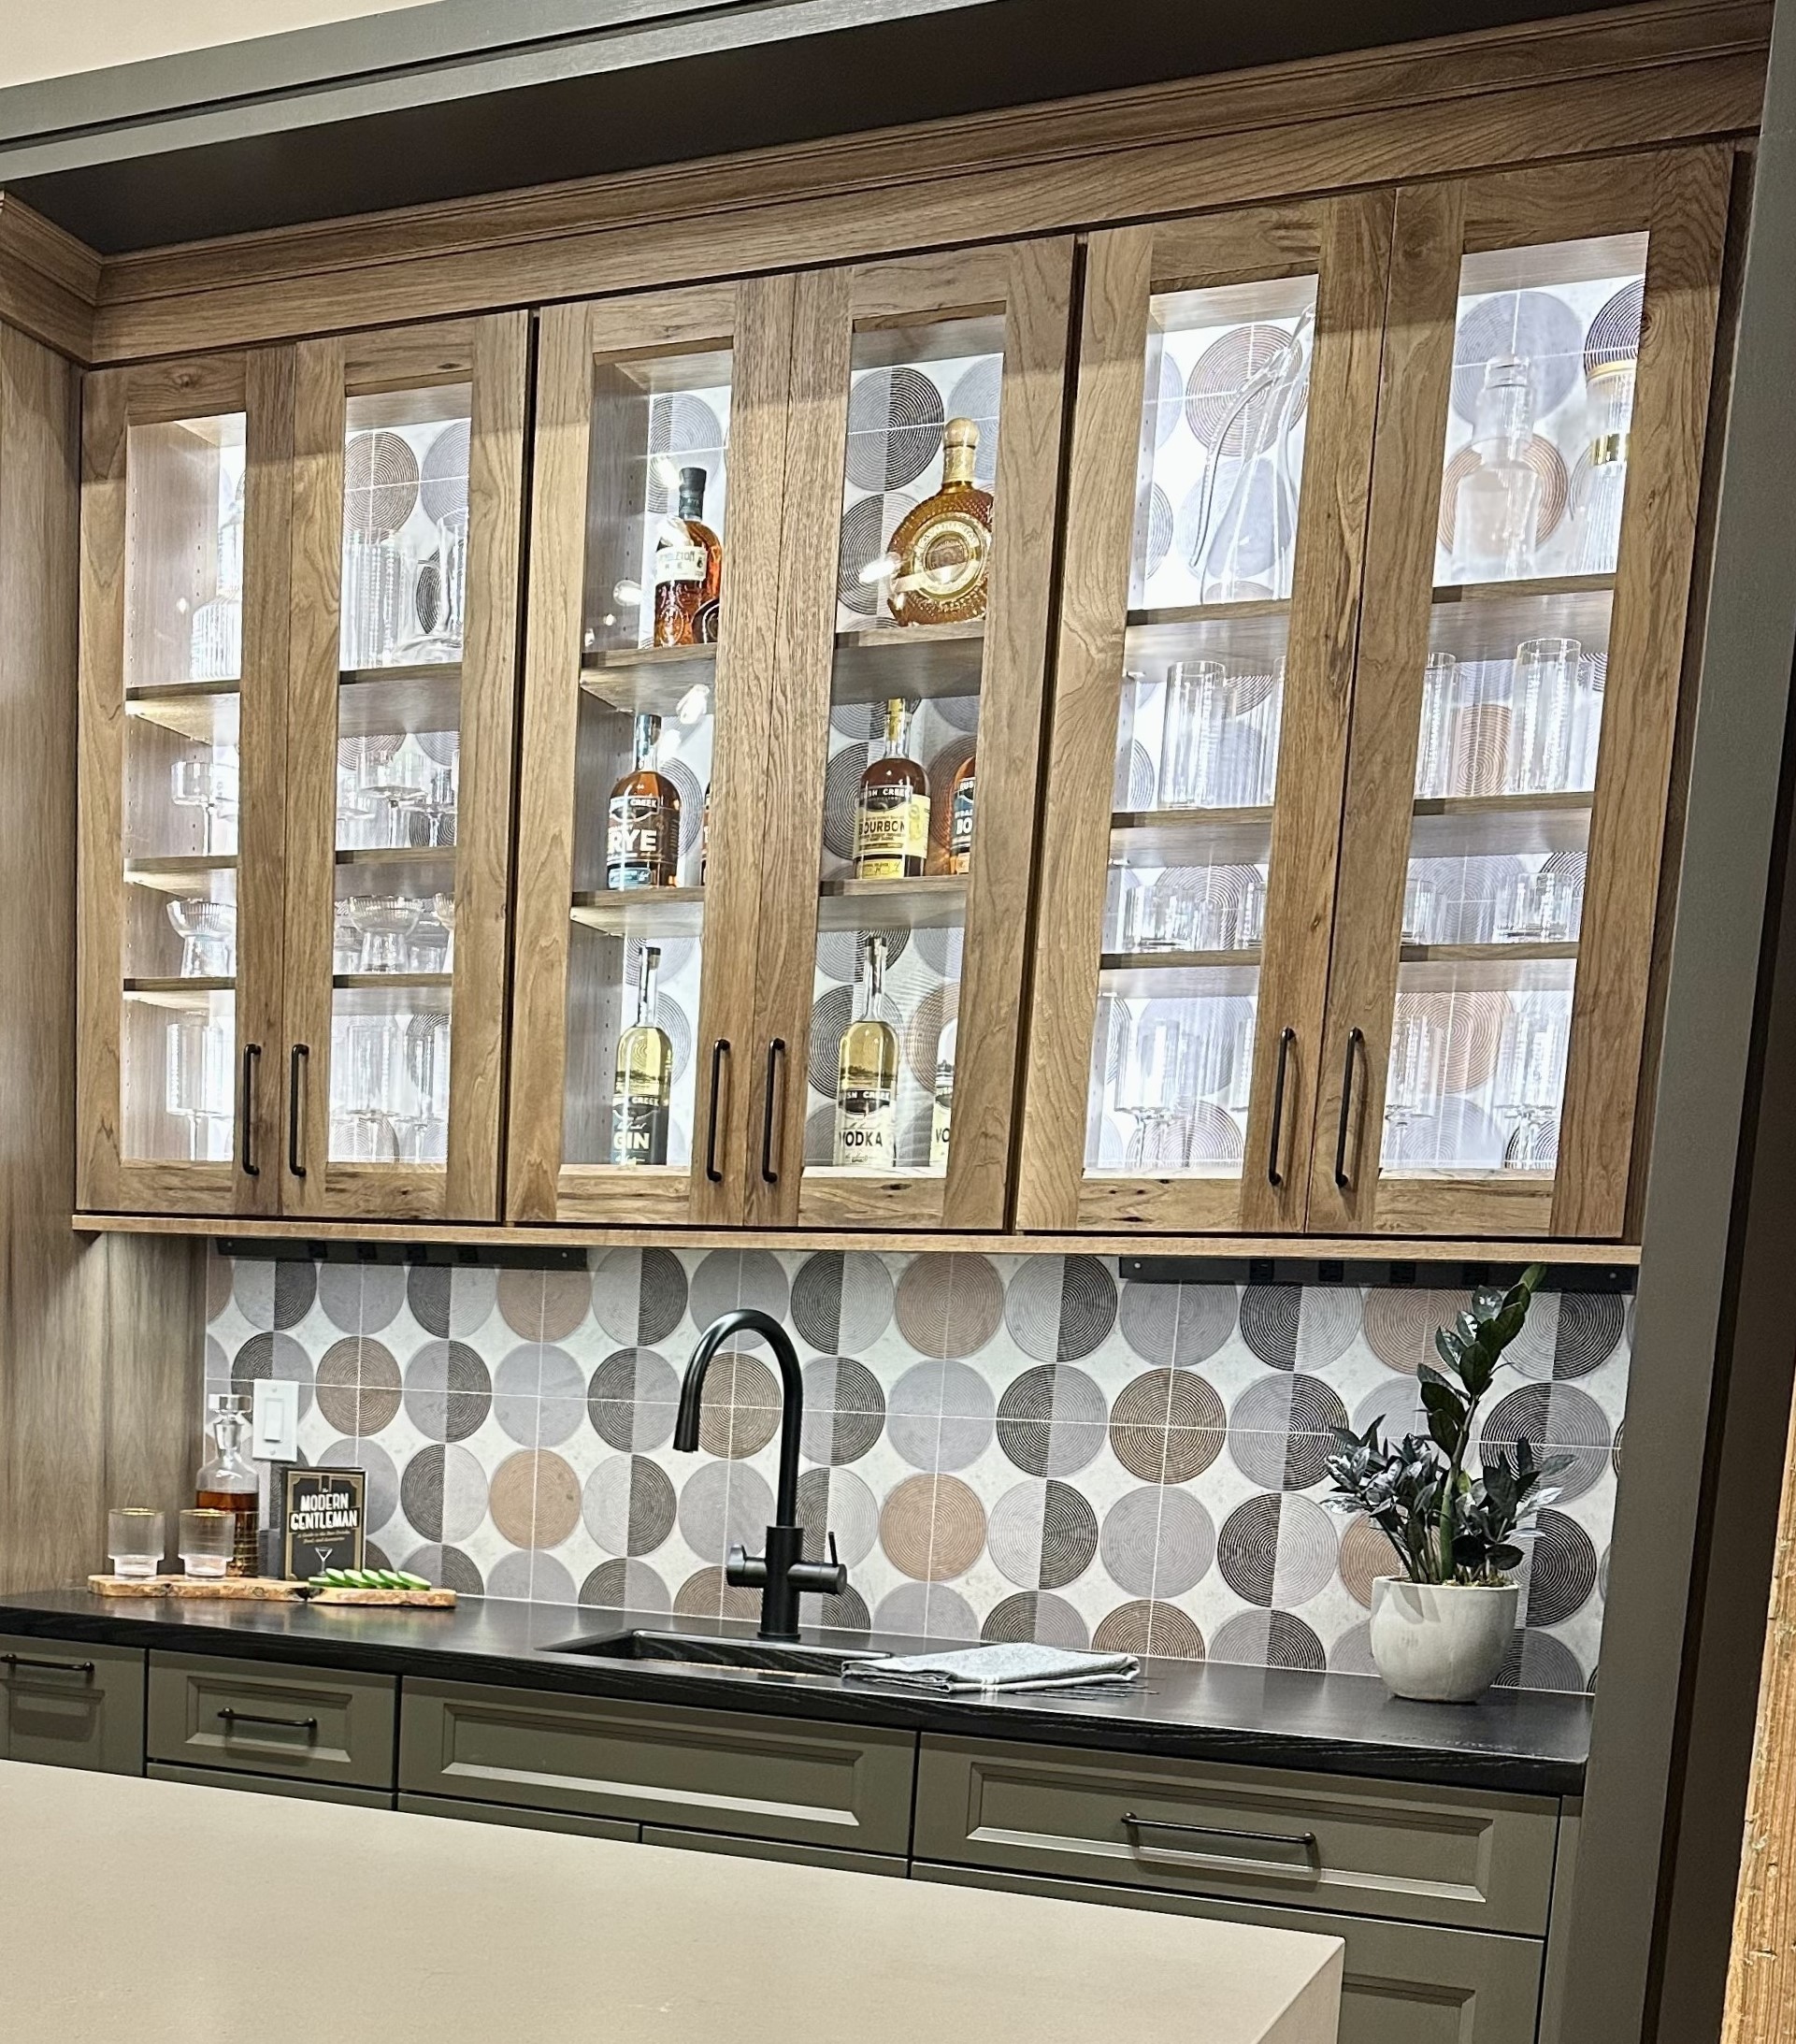 Tiles behind bar cabinets